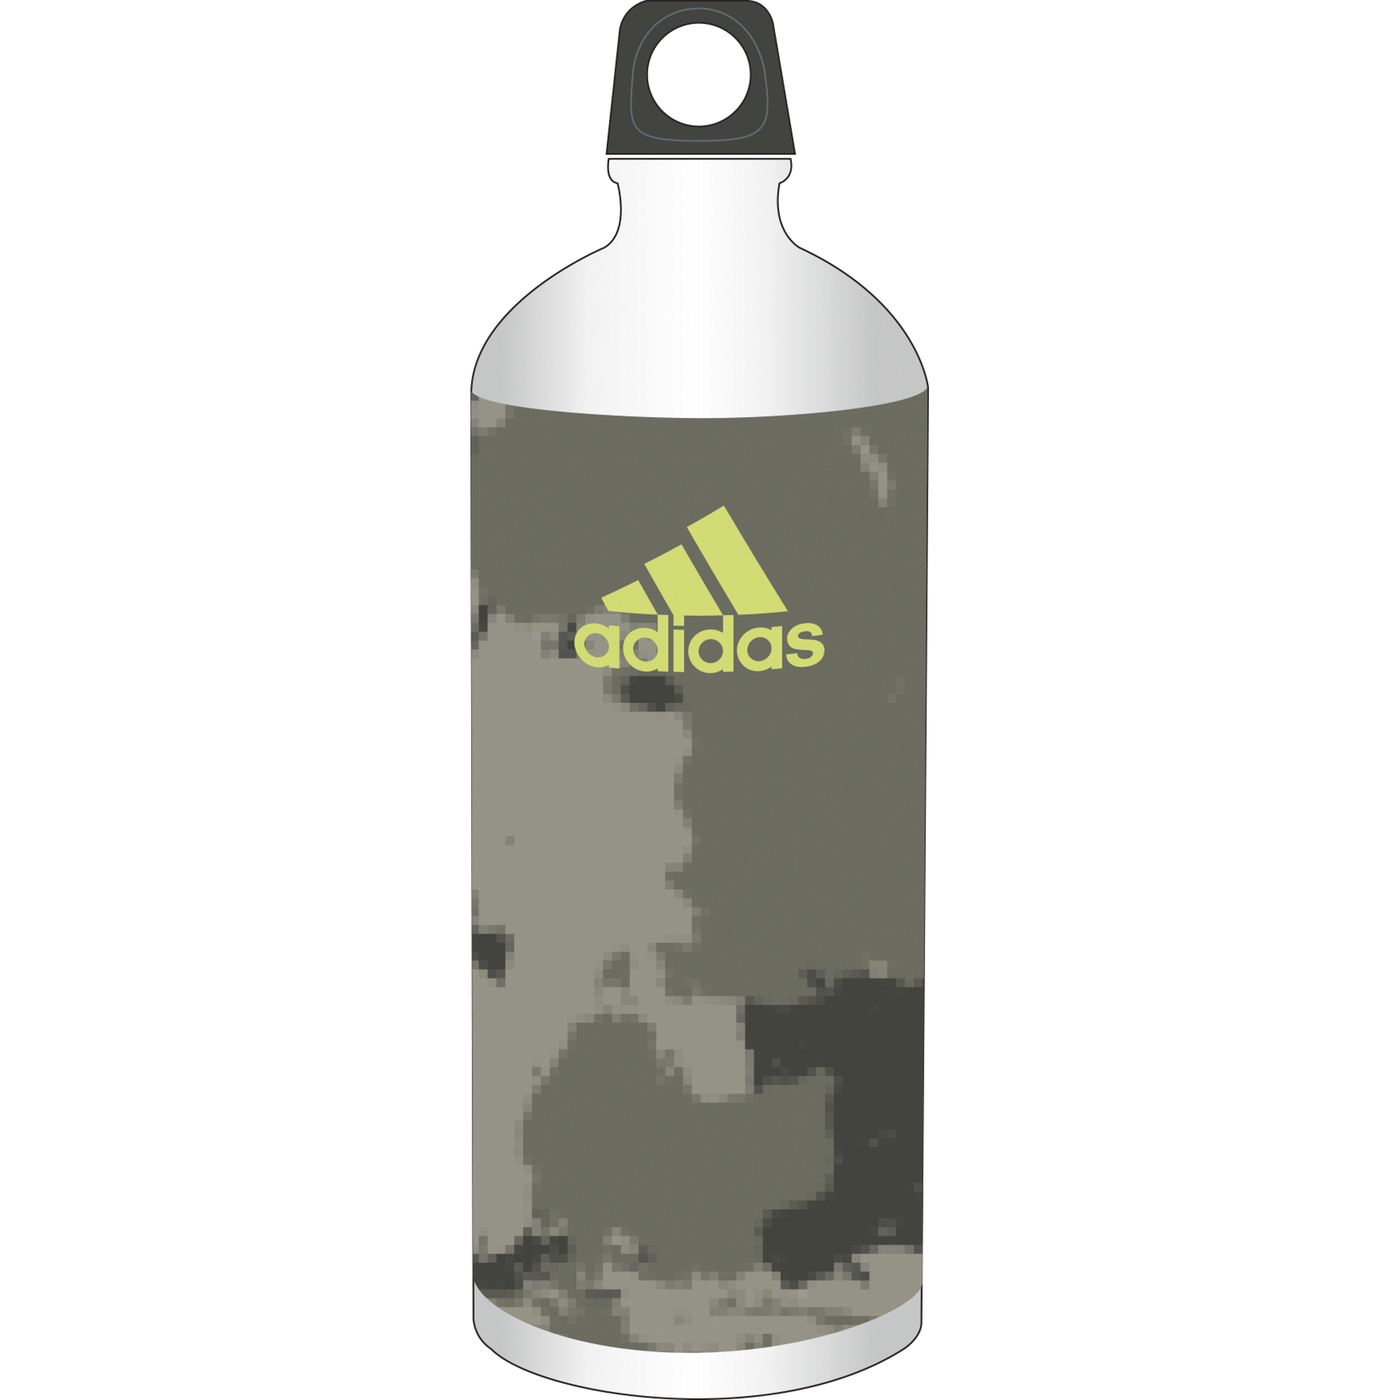 adidas steel bottle